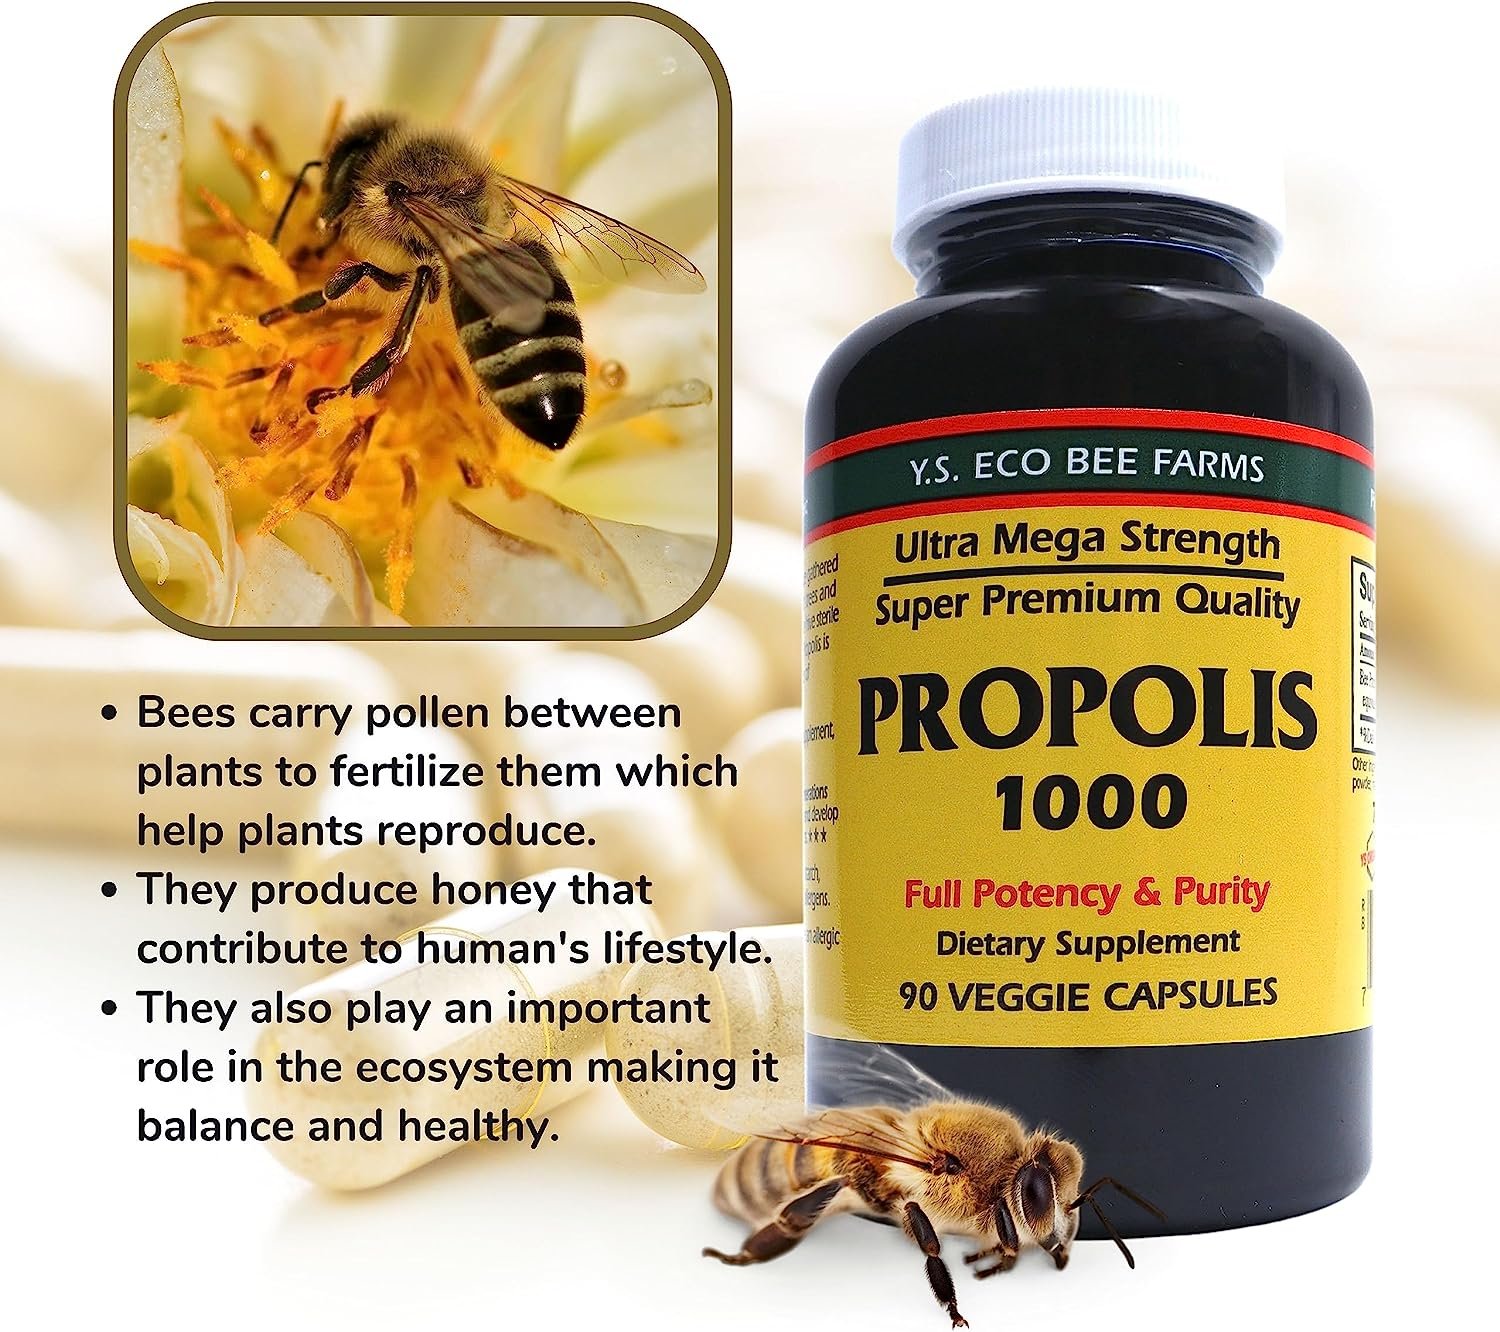 YS Organics Bee Farm Ultra Mega Strength - Propolis 1000 - Full Potency and Purity - 90 Capsules - with Multi-Purpose Key Chain